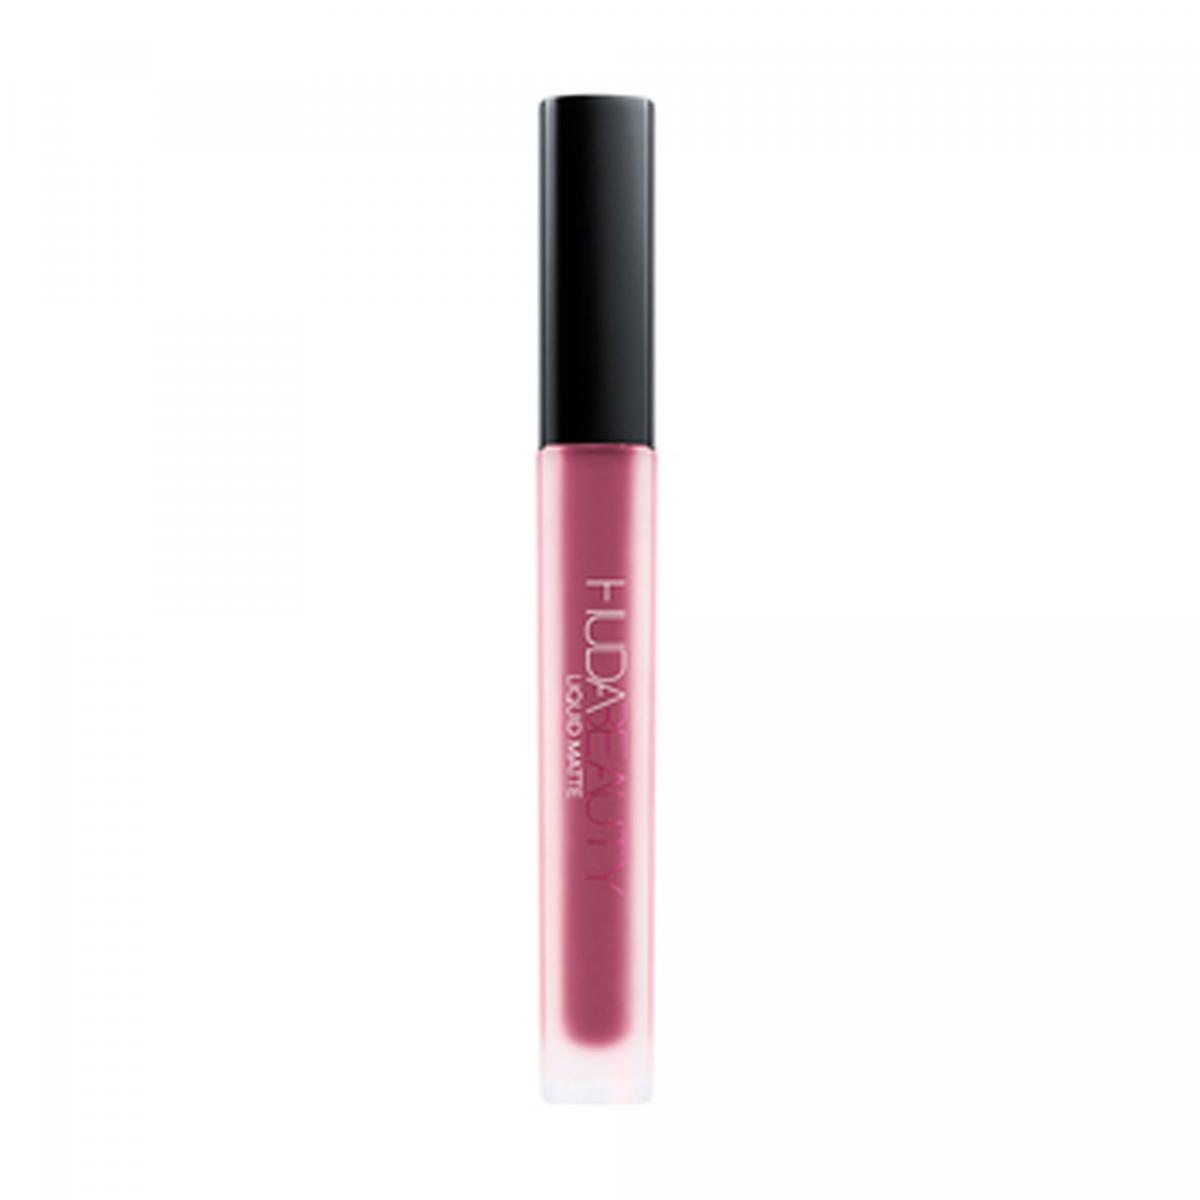 Liquid Matte Ultra-comfort transfer-proof lipstick